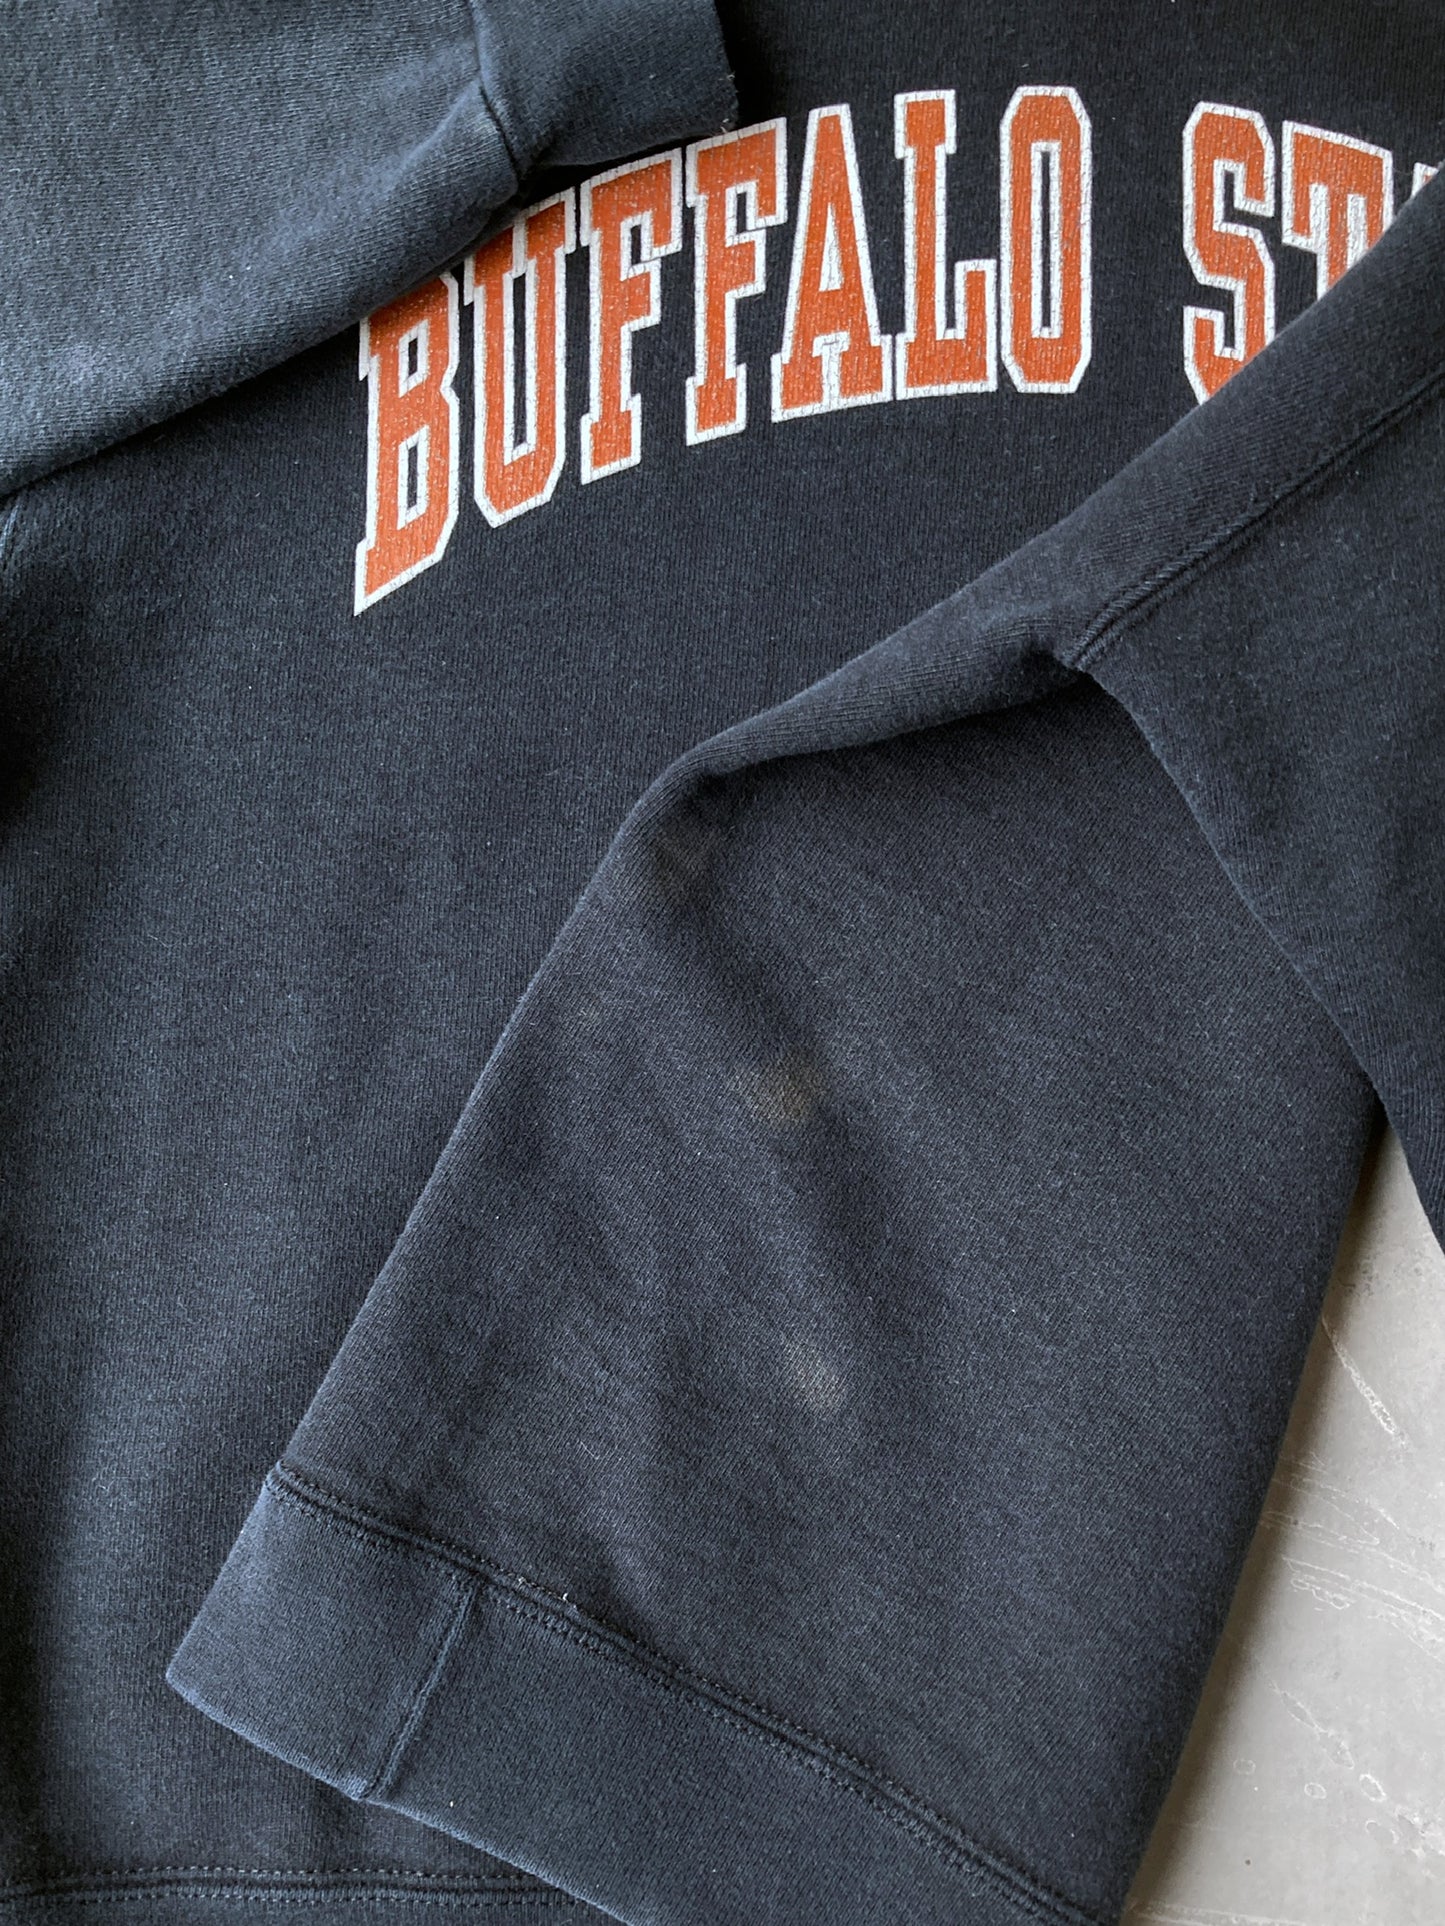 Buffalo State Sweatshirt 00's - Medium